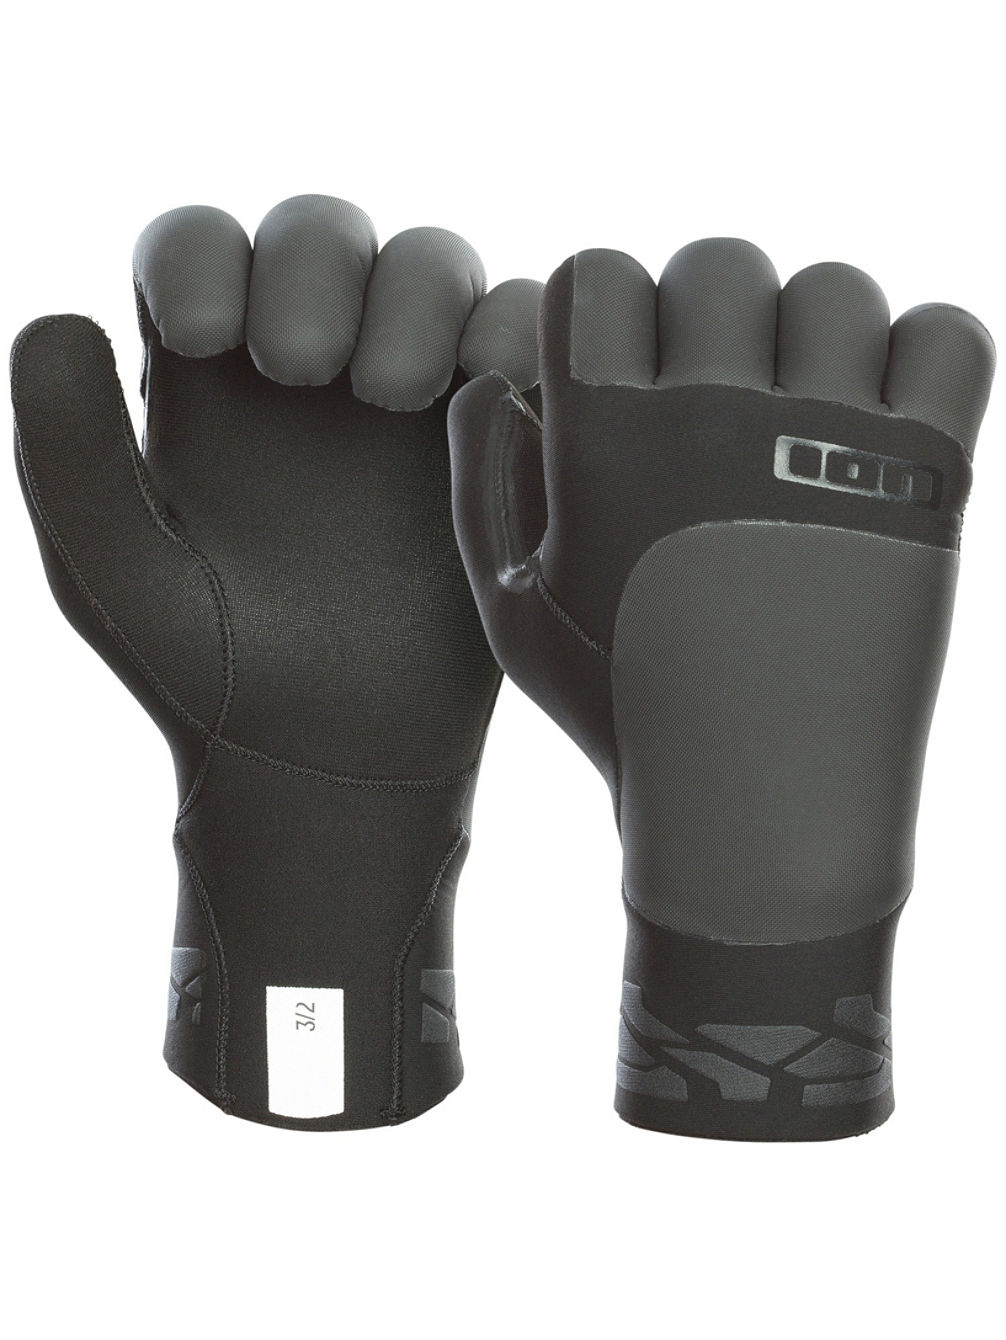 Claw 3/2 Neoprene Gloves